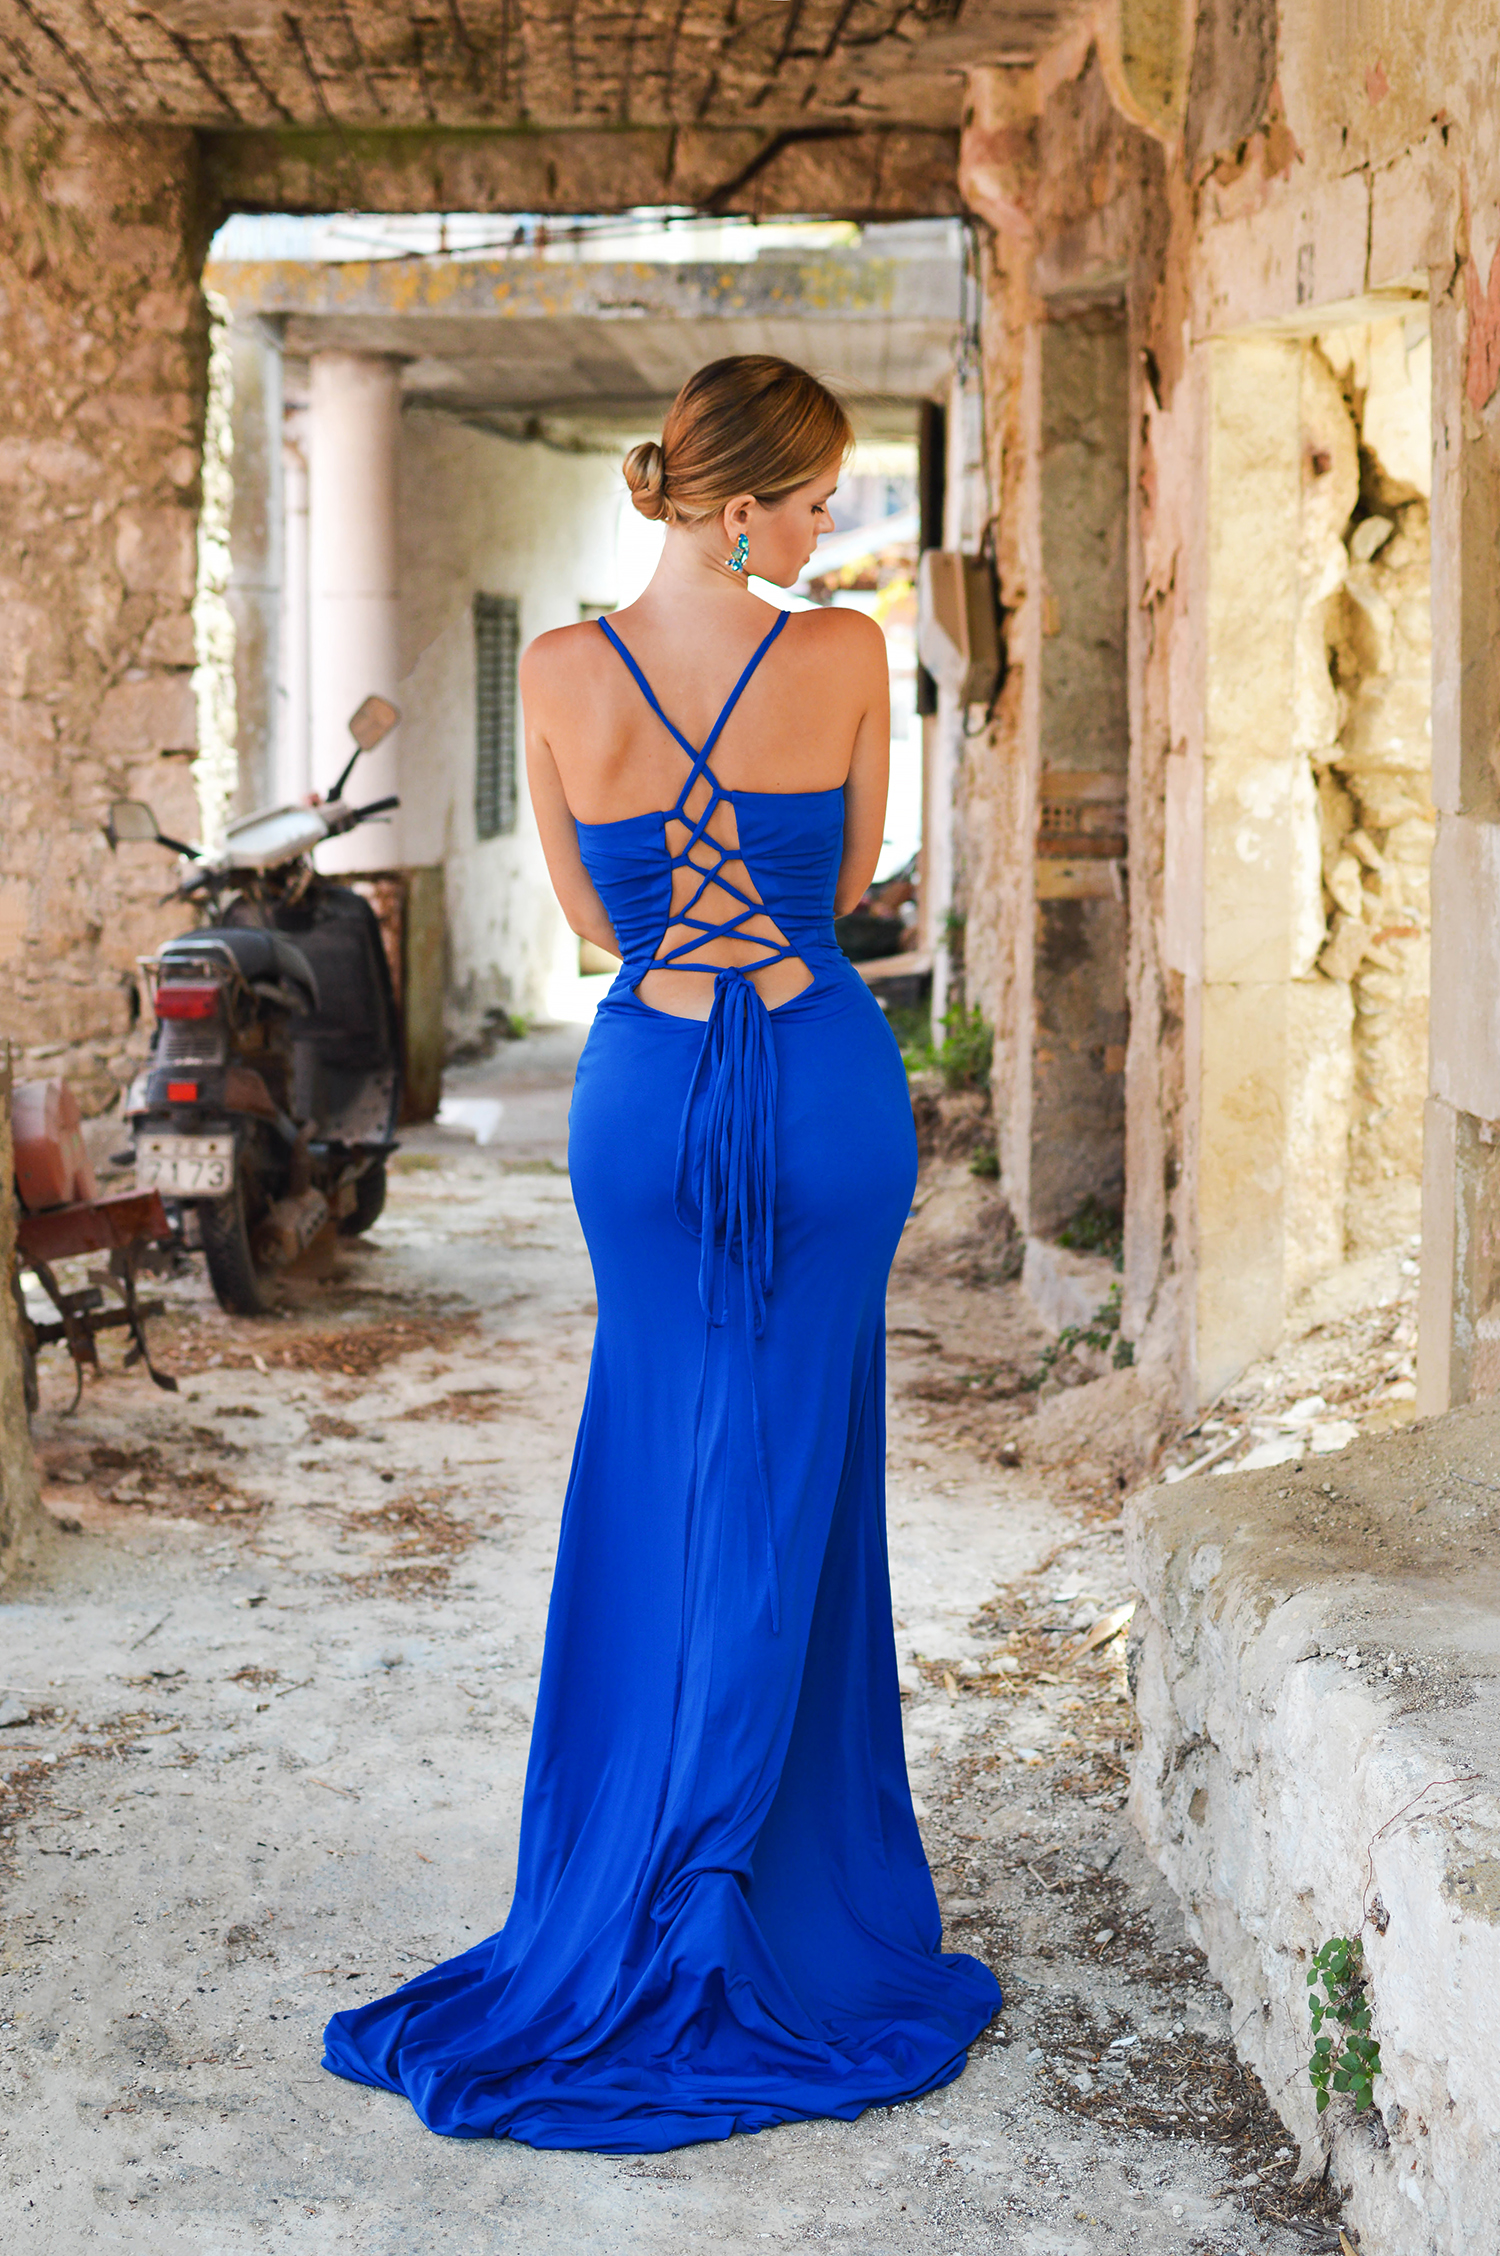 Stunning Blue Dress by Tamara Bellis